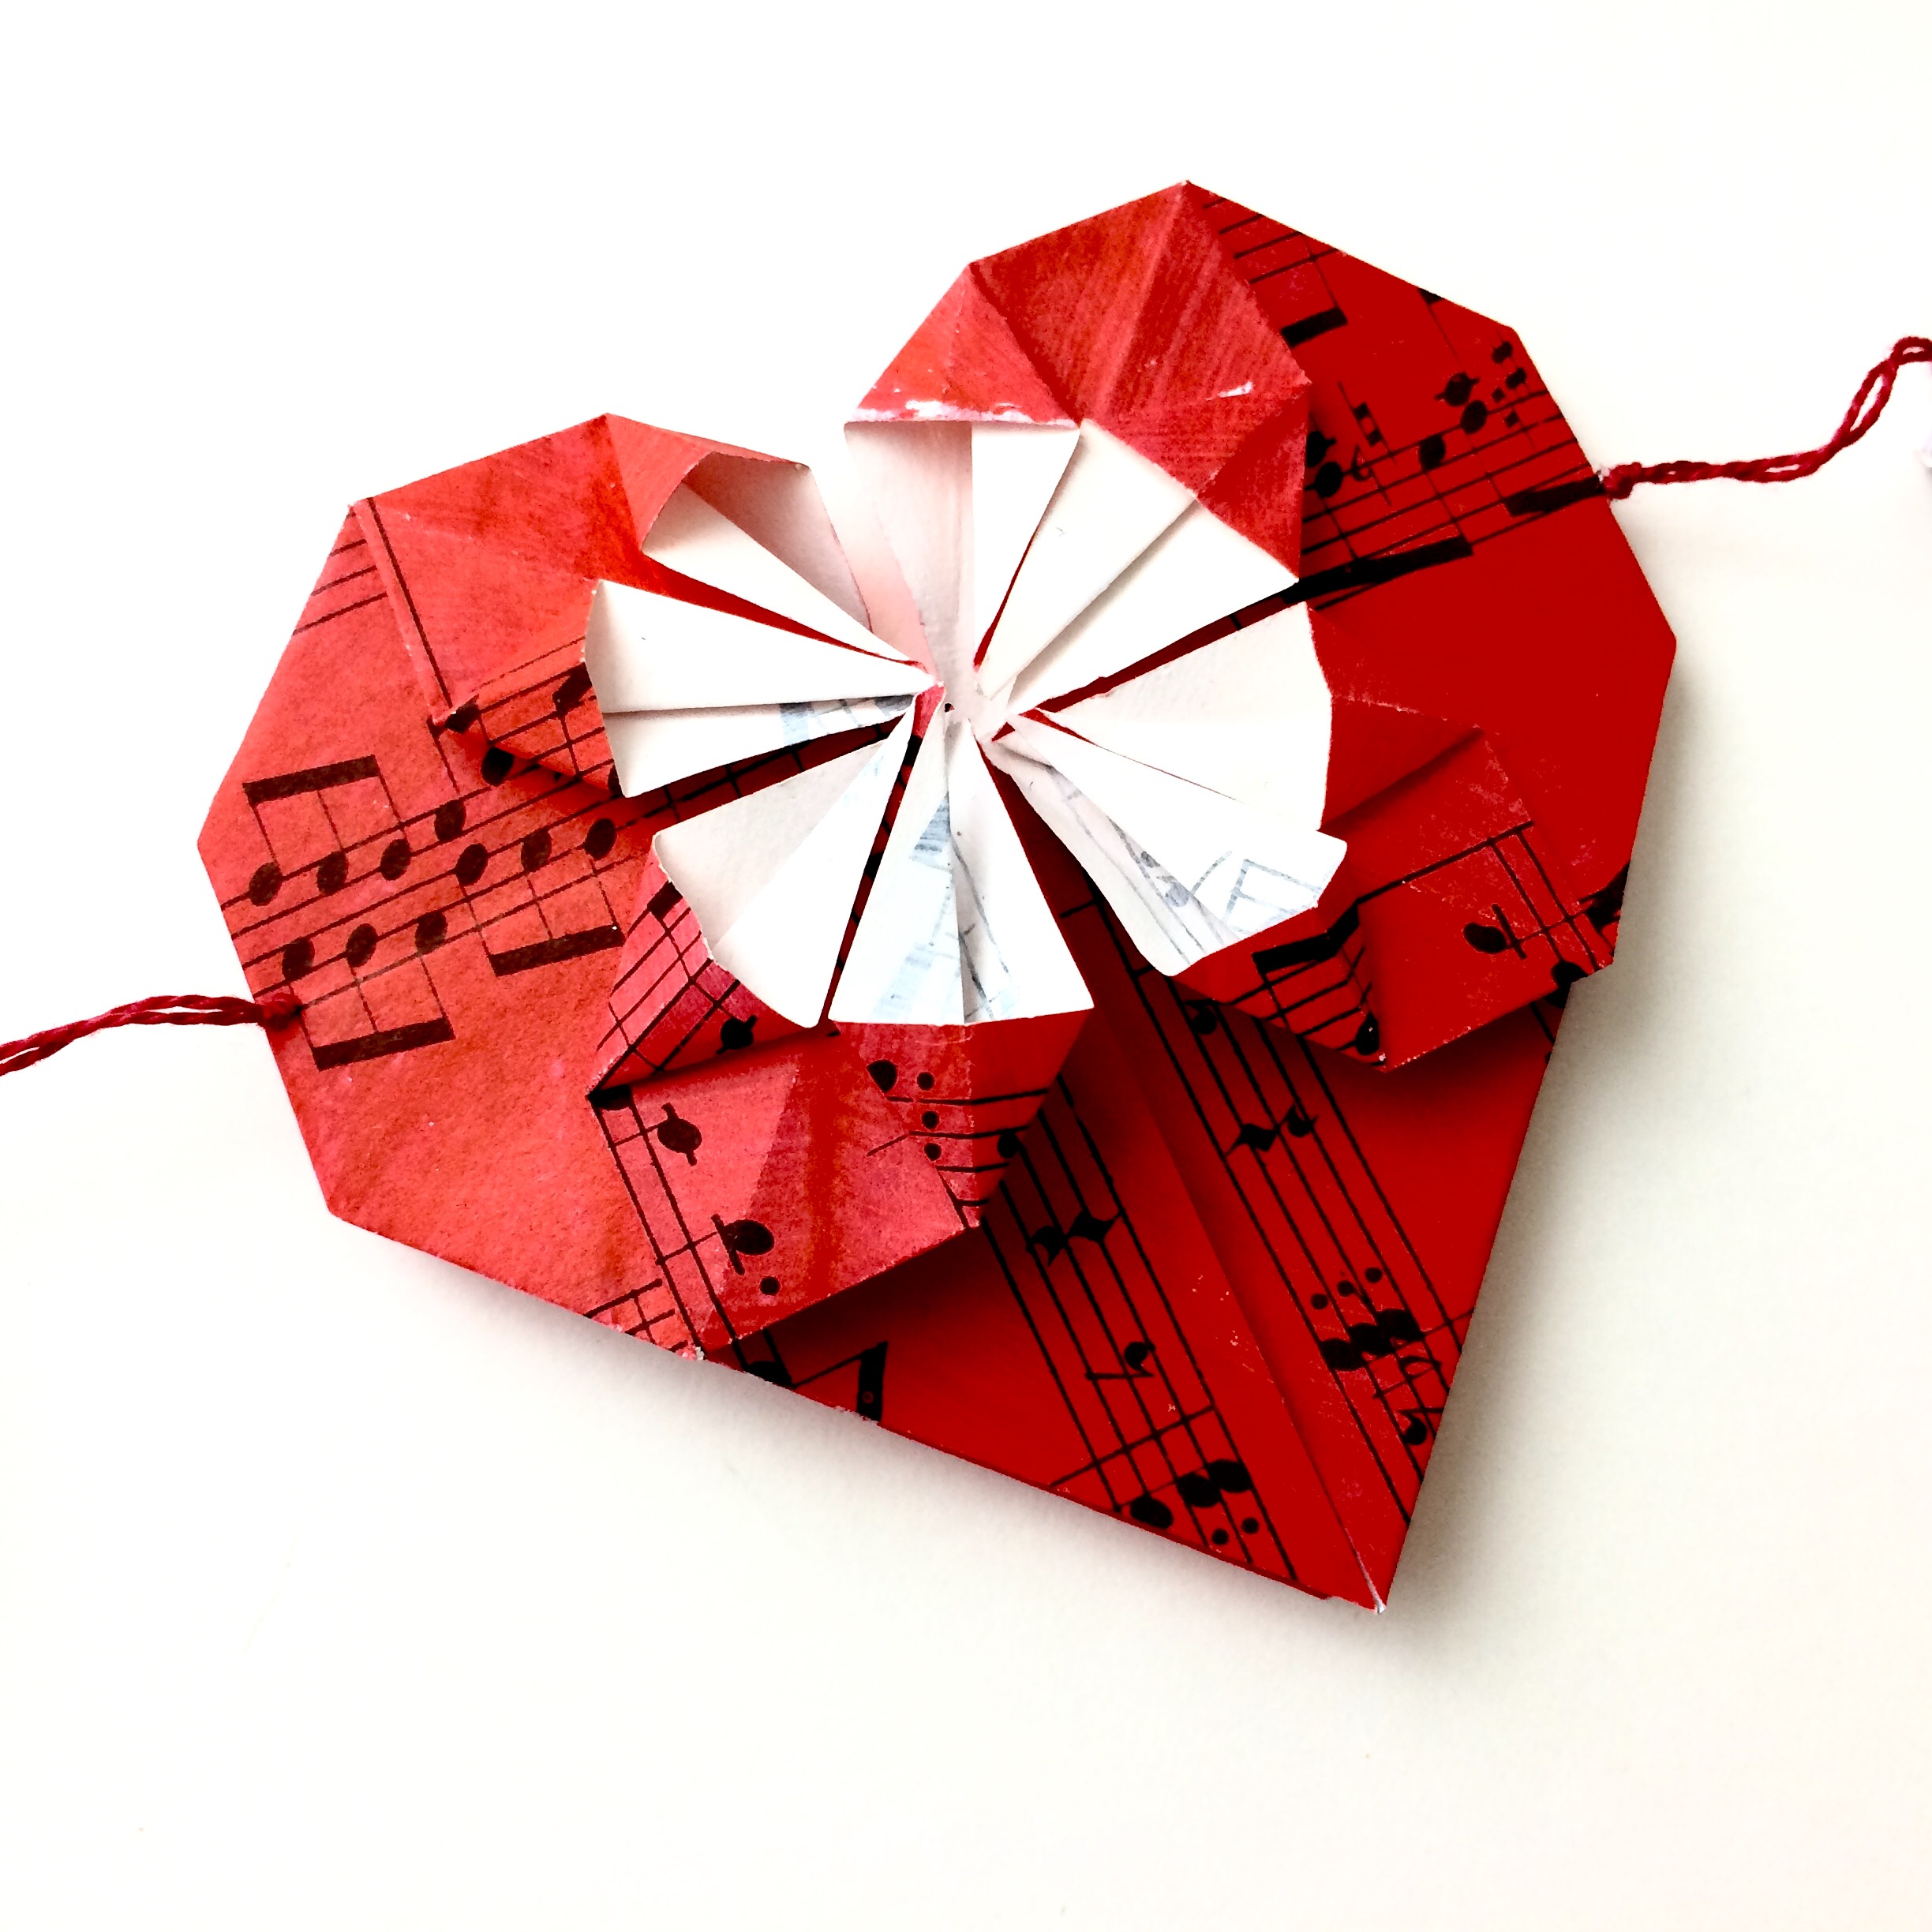 origami hearts tutorial